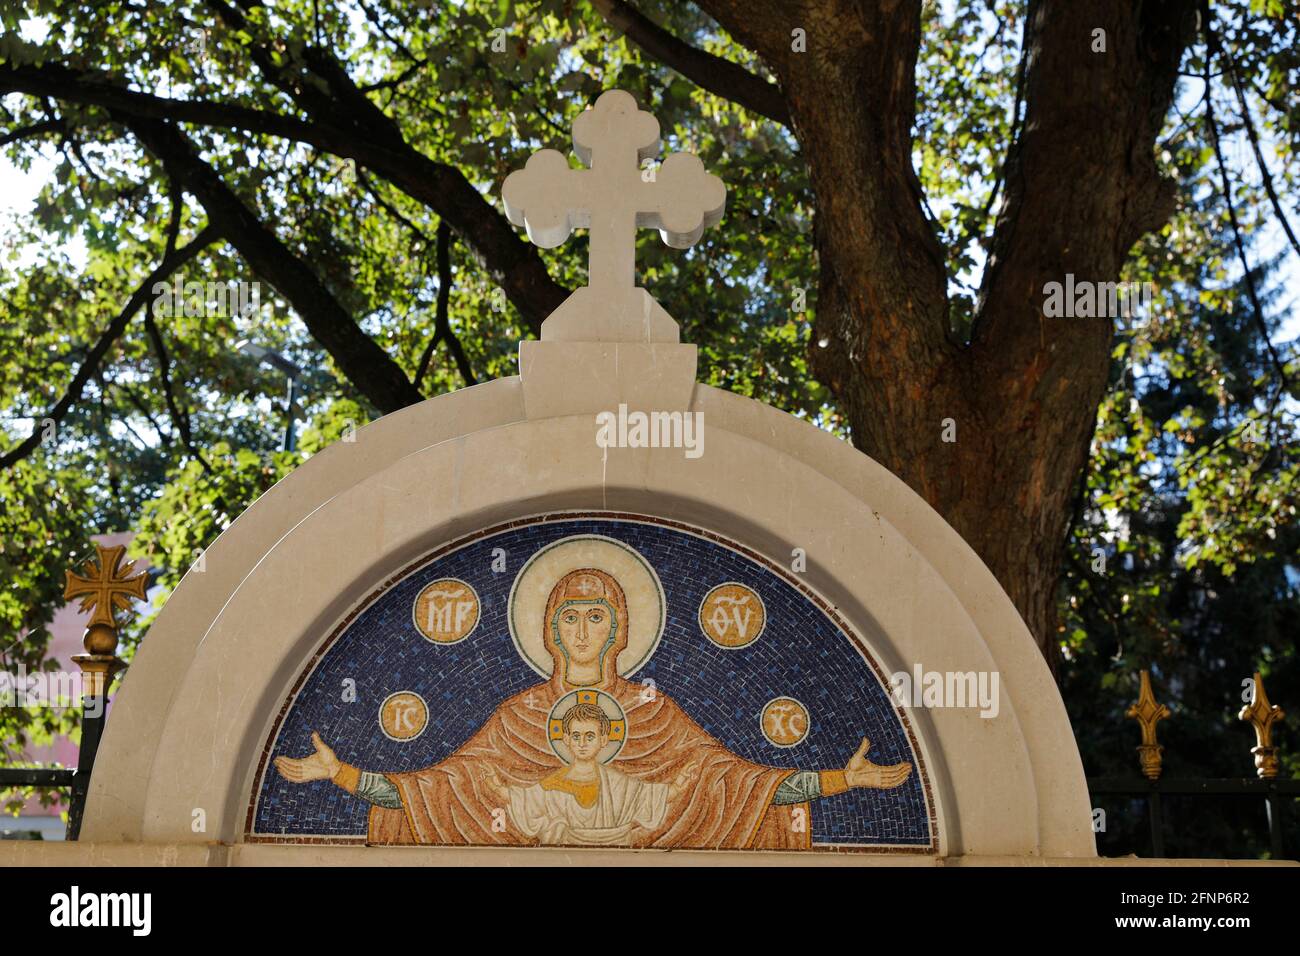 La fontana della cattedrale cristiana ortodossa di Sarajevo, Bosnia-Erzegovina Foto Stock